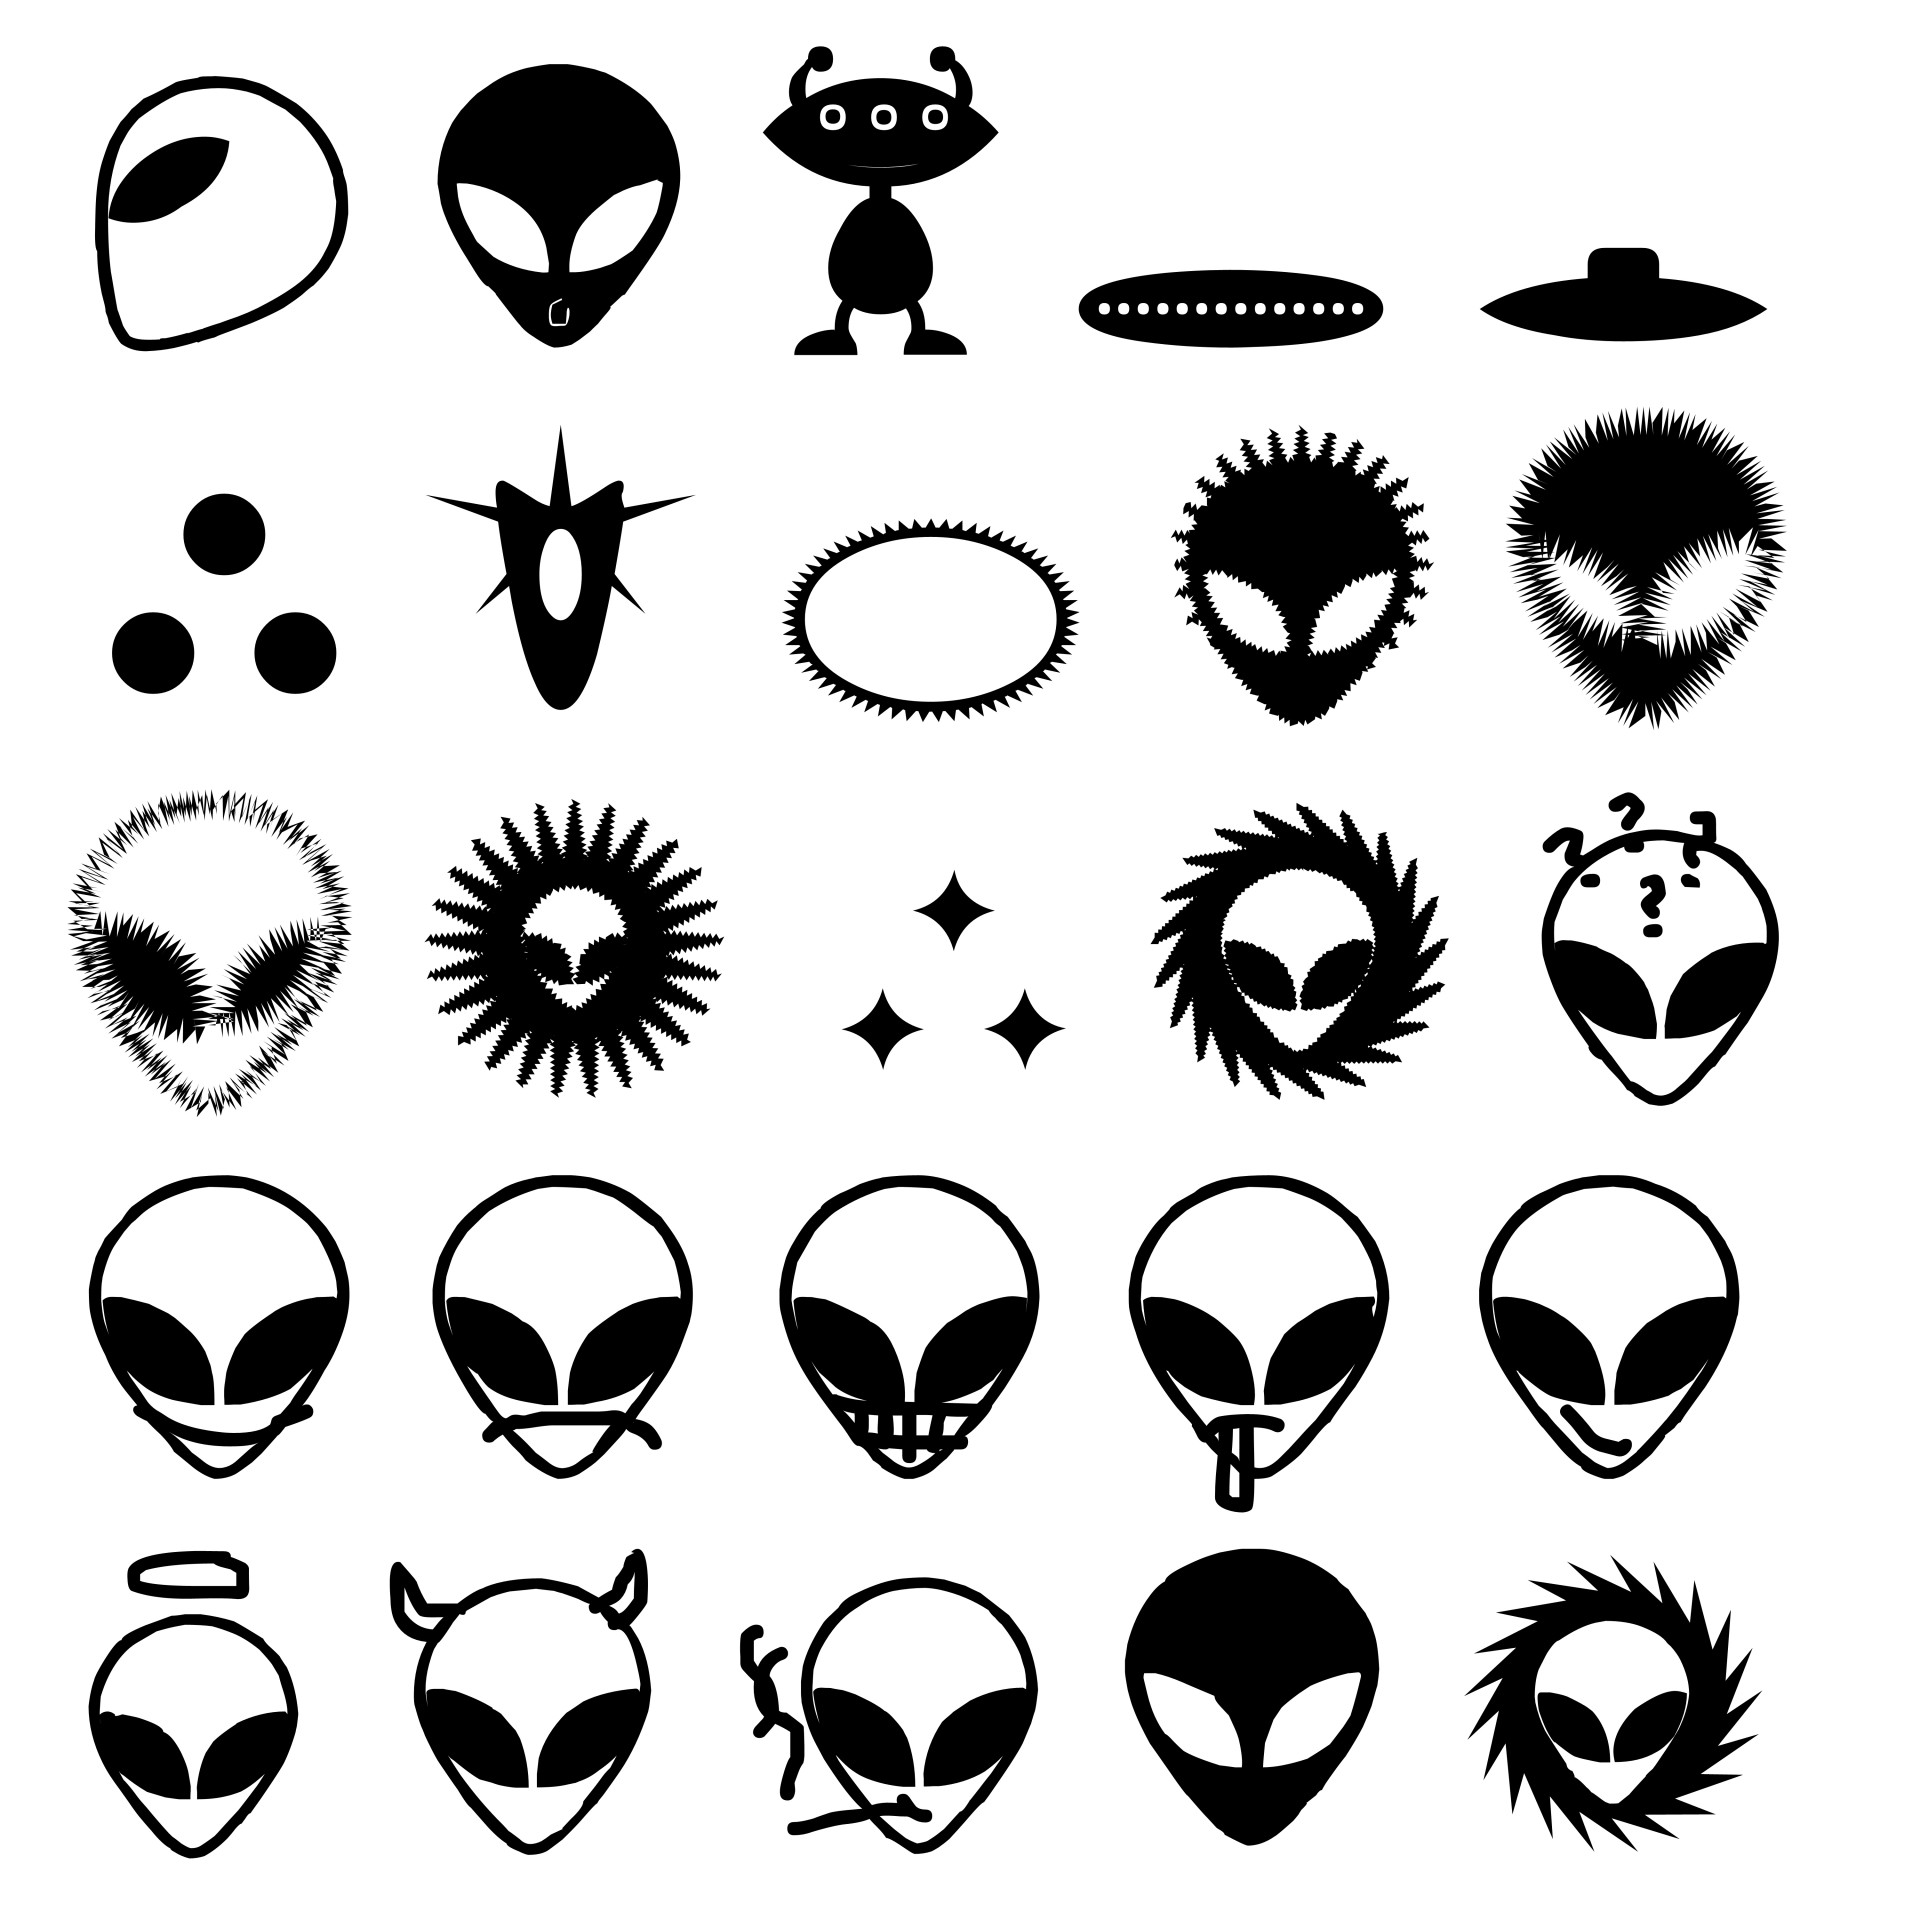 alien faces silhouettes free photo